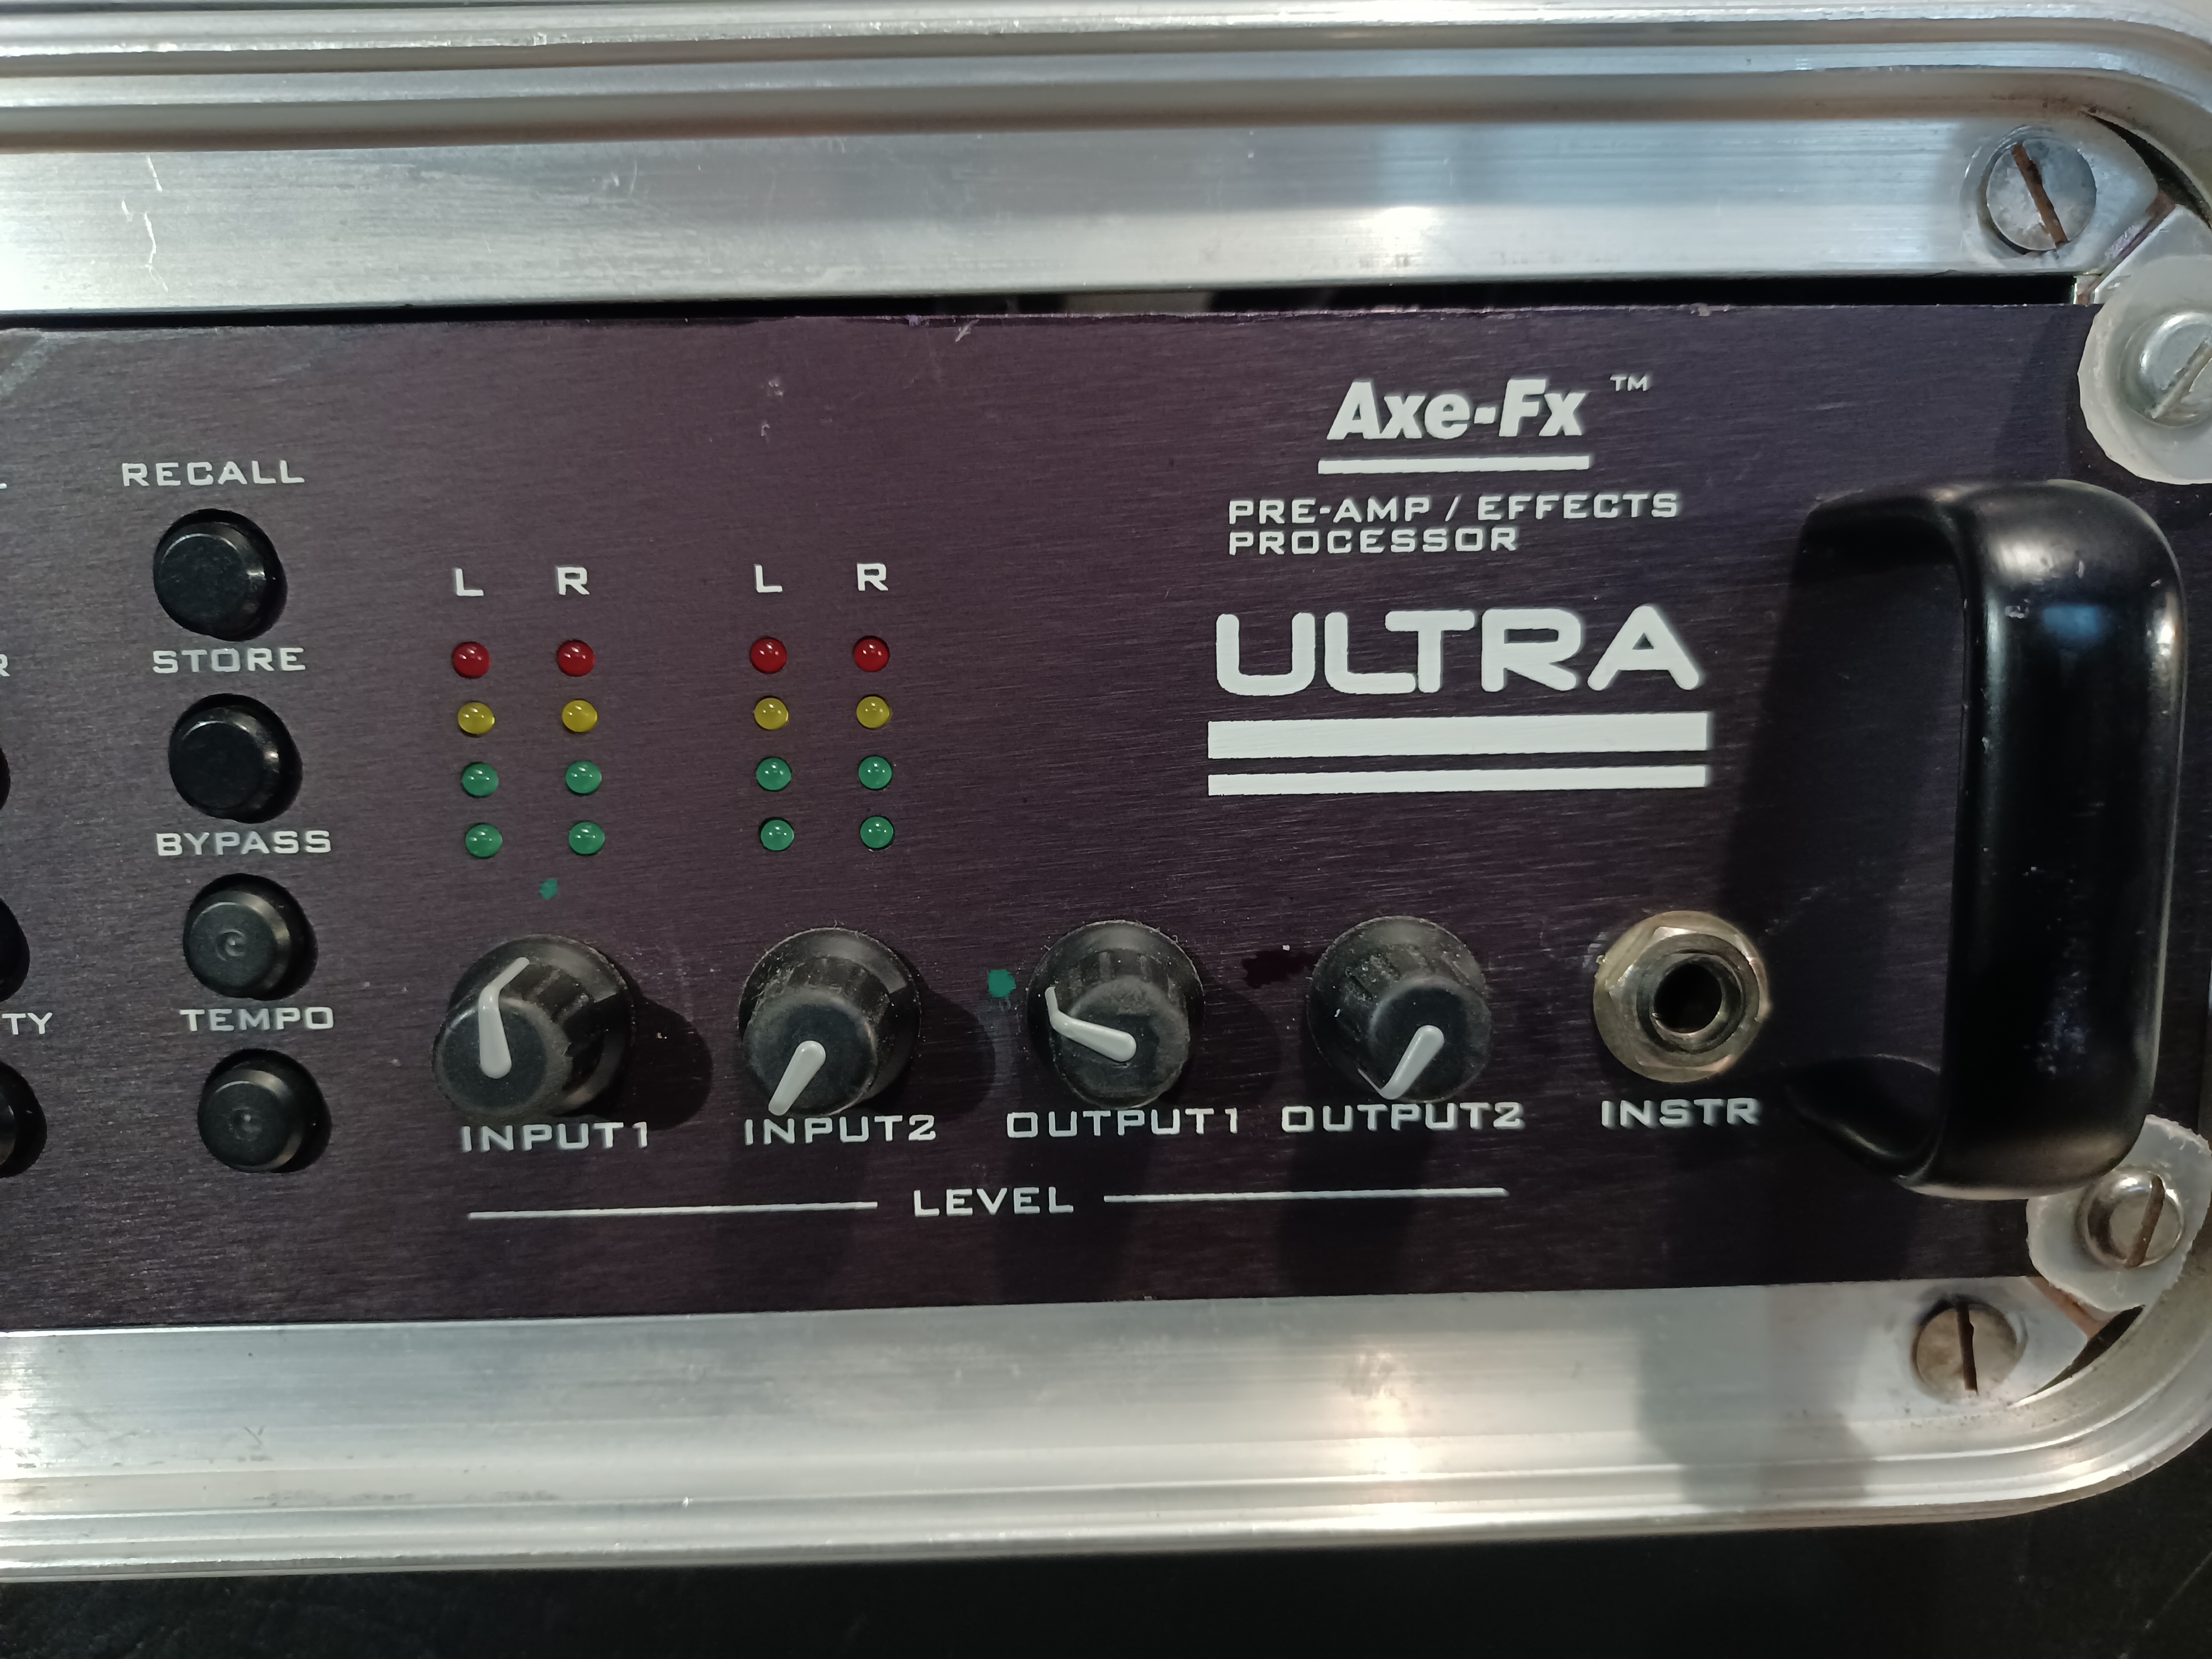 Axe-Fx Ultra - Fractal Audio Systems Axe-Fx Ultra - Audiofanzine